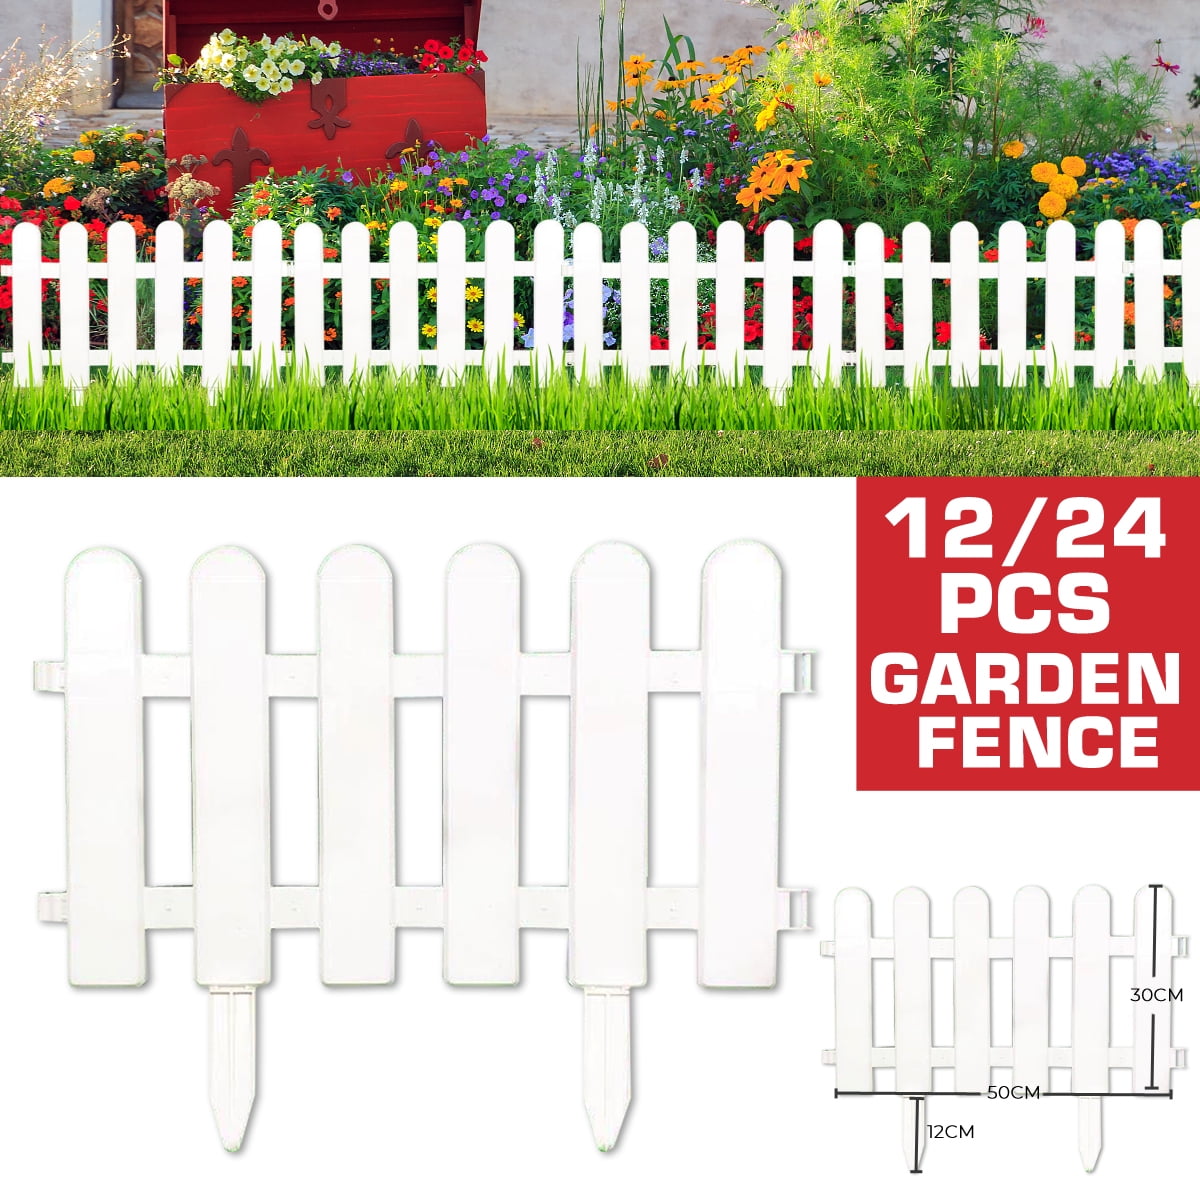 US 24PCS Garden Plastic Fence Outdoor Lawn Edging Border Panel Edge Fencing Yard 